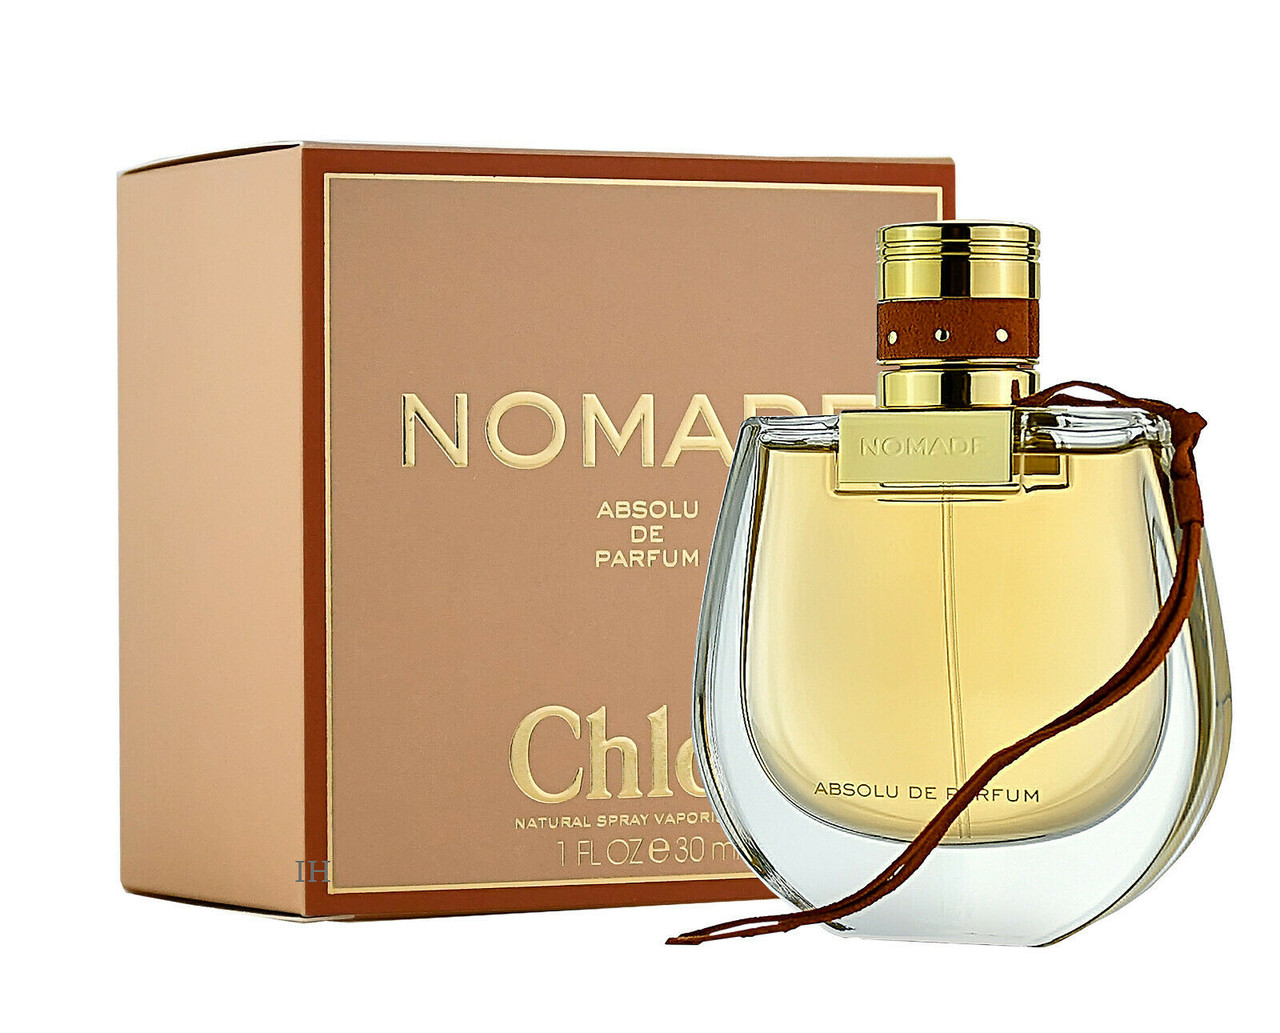 chloe nomade perfume